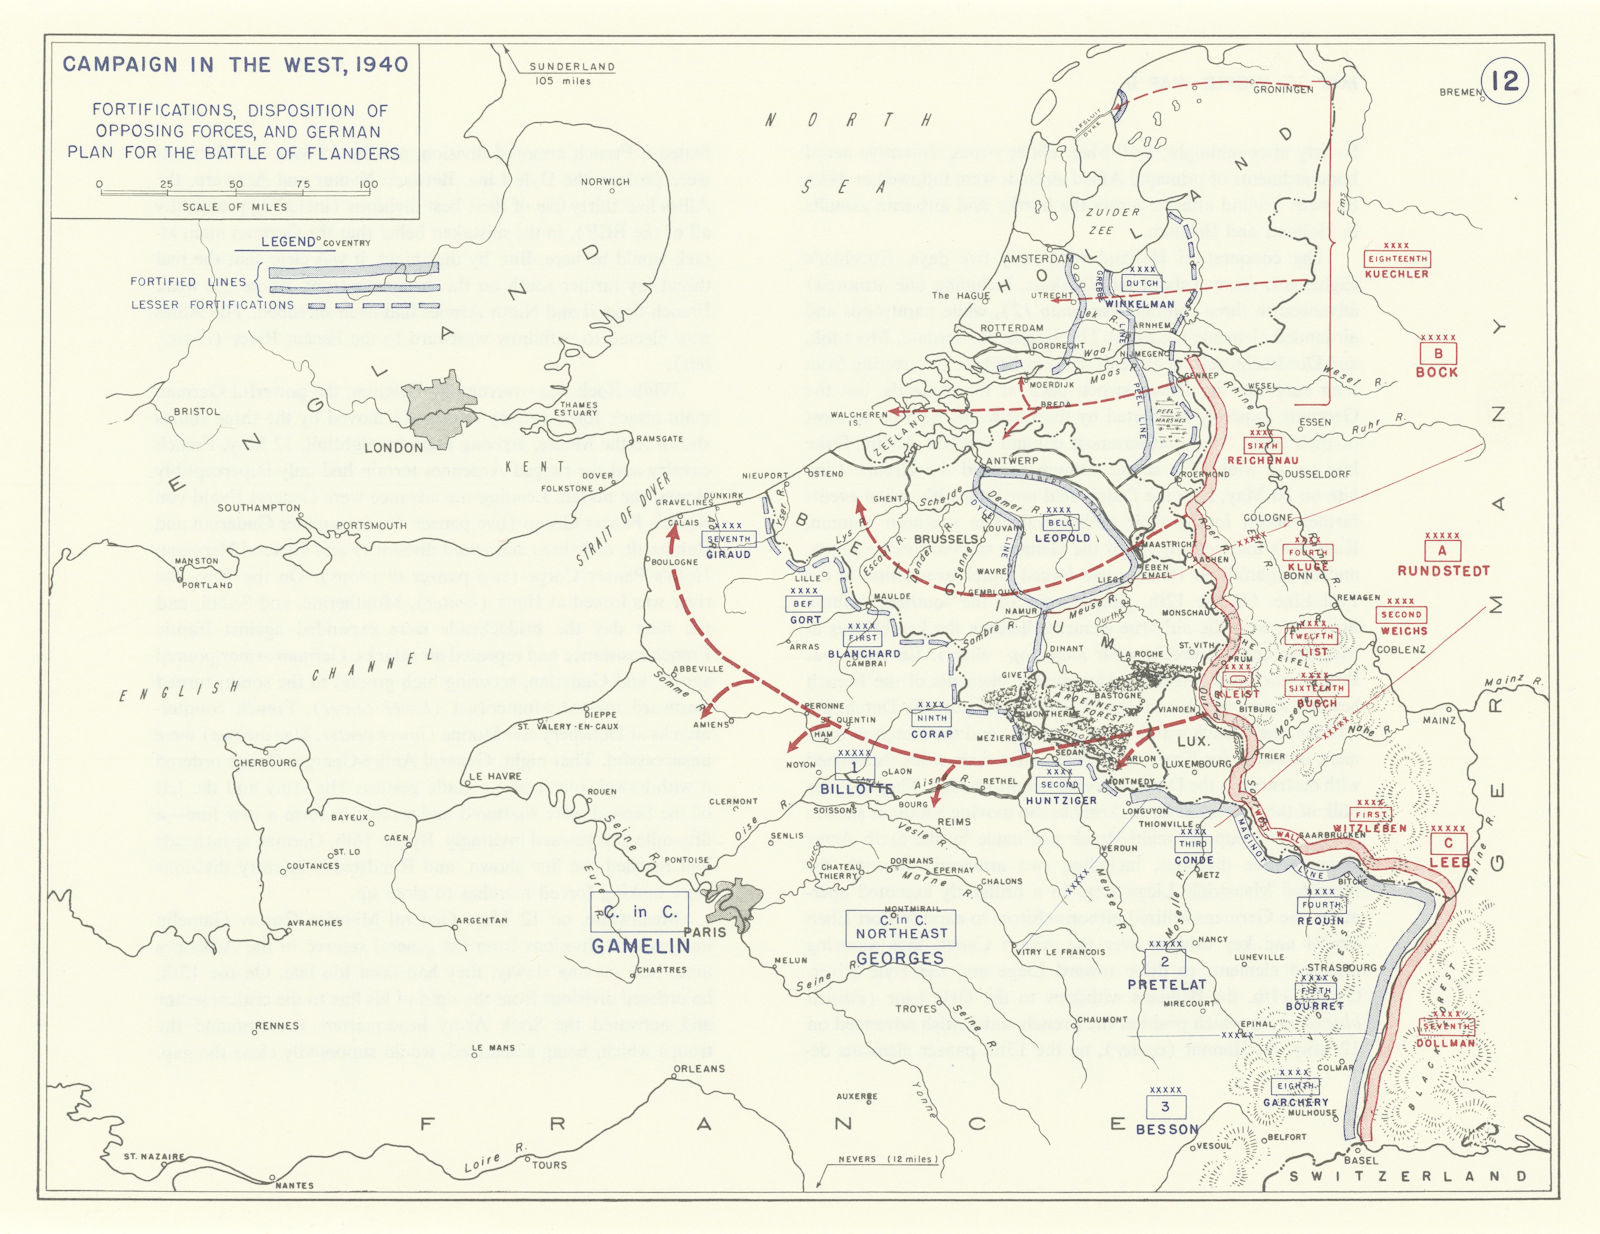 World War 2. Invasion of Belgium & Netherlands 1940. Forces/German plan 1959 map